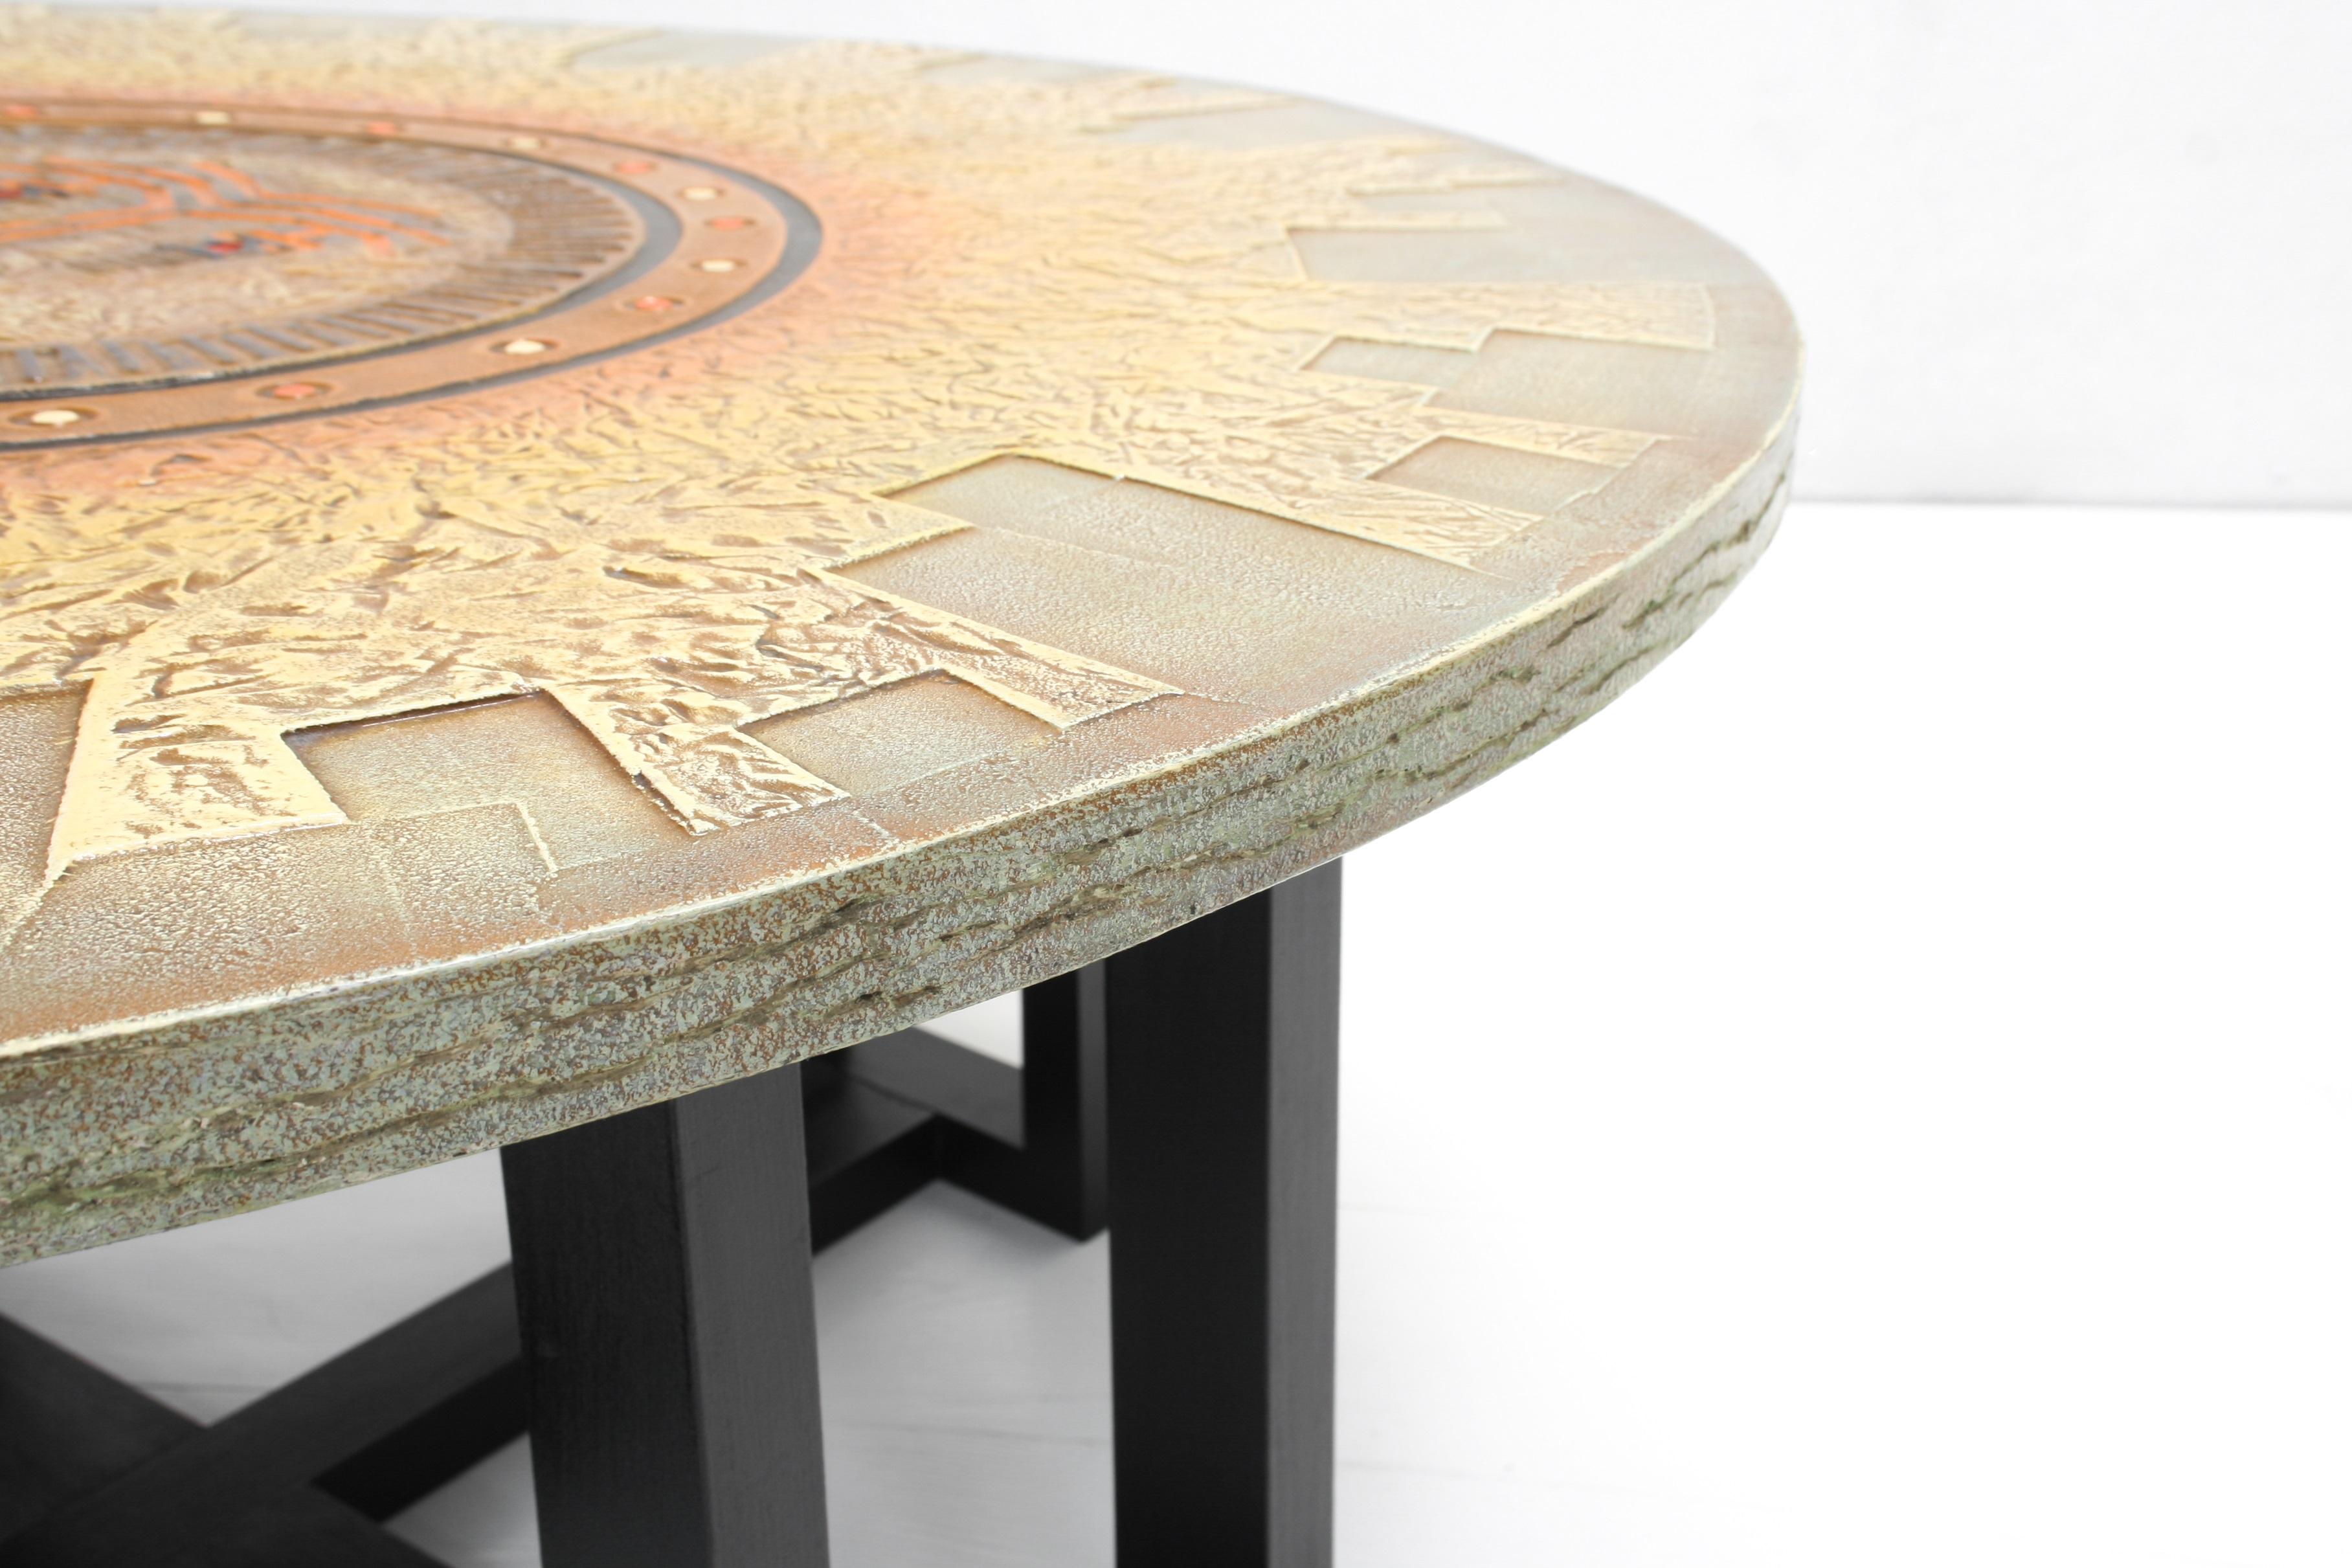 20th Century Aztec Relief Art Sunburst Coffee Table by DK